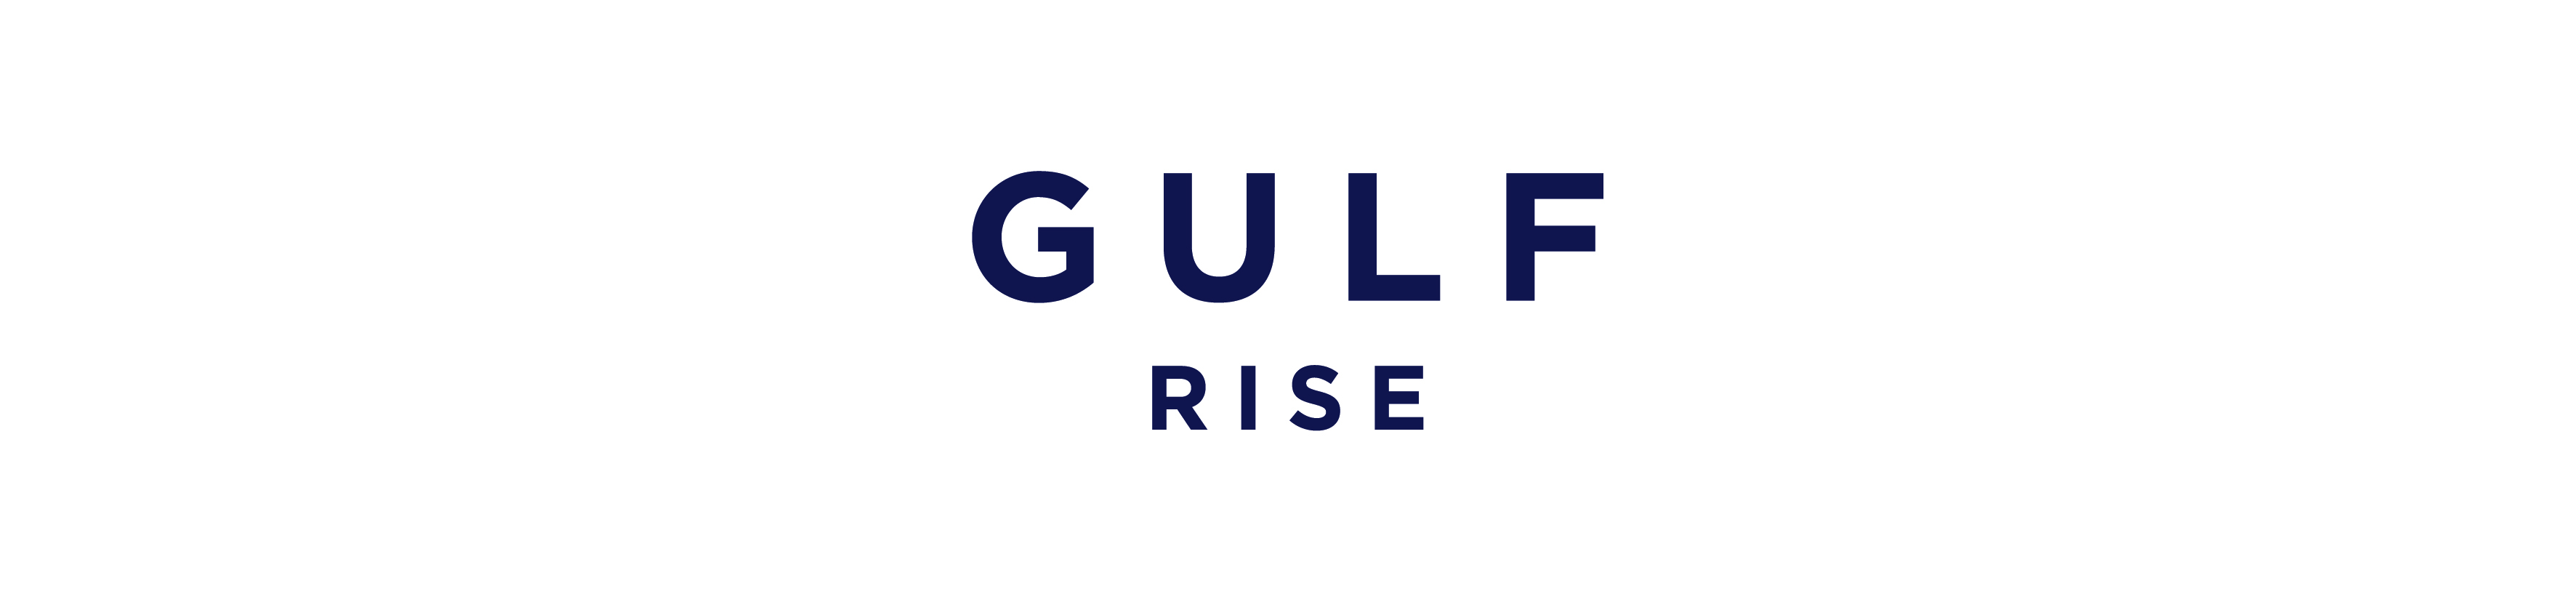 Gulf Rise - Metlifecare logo